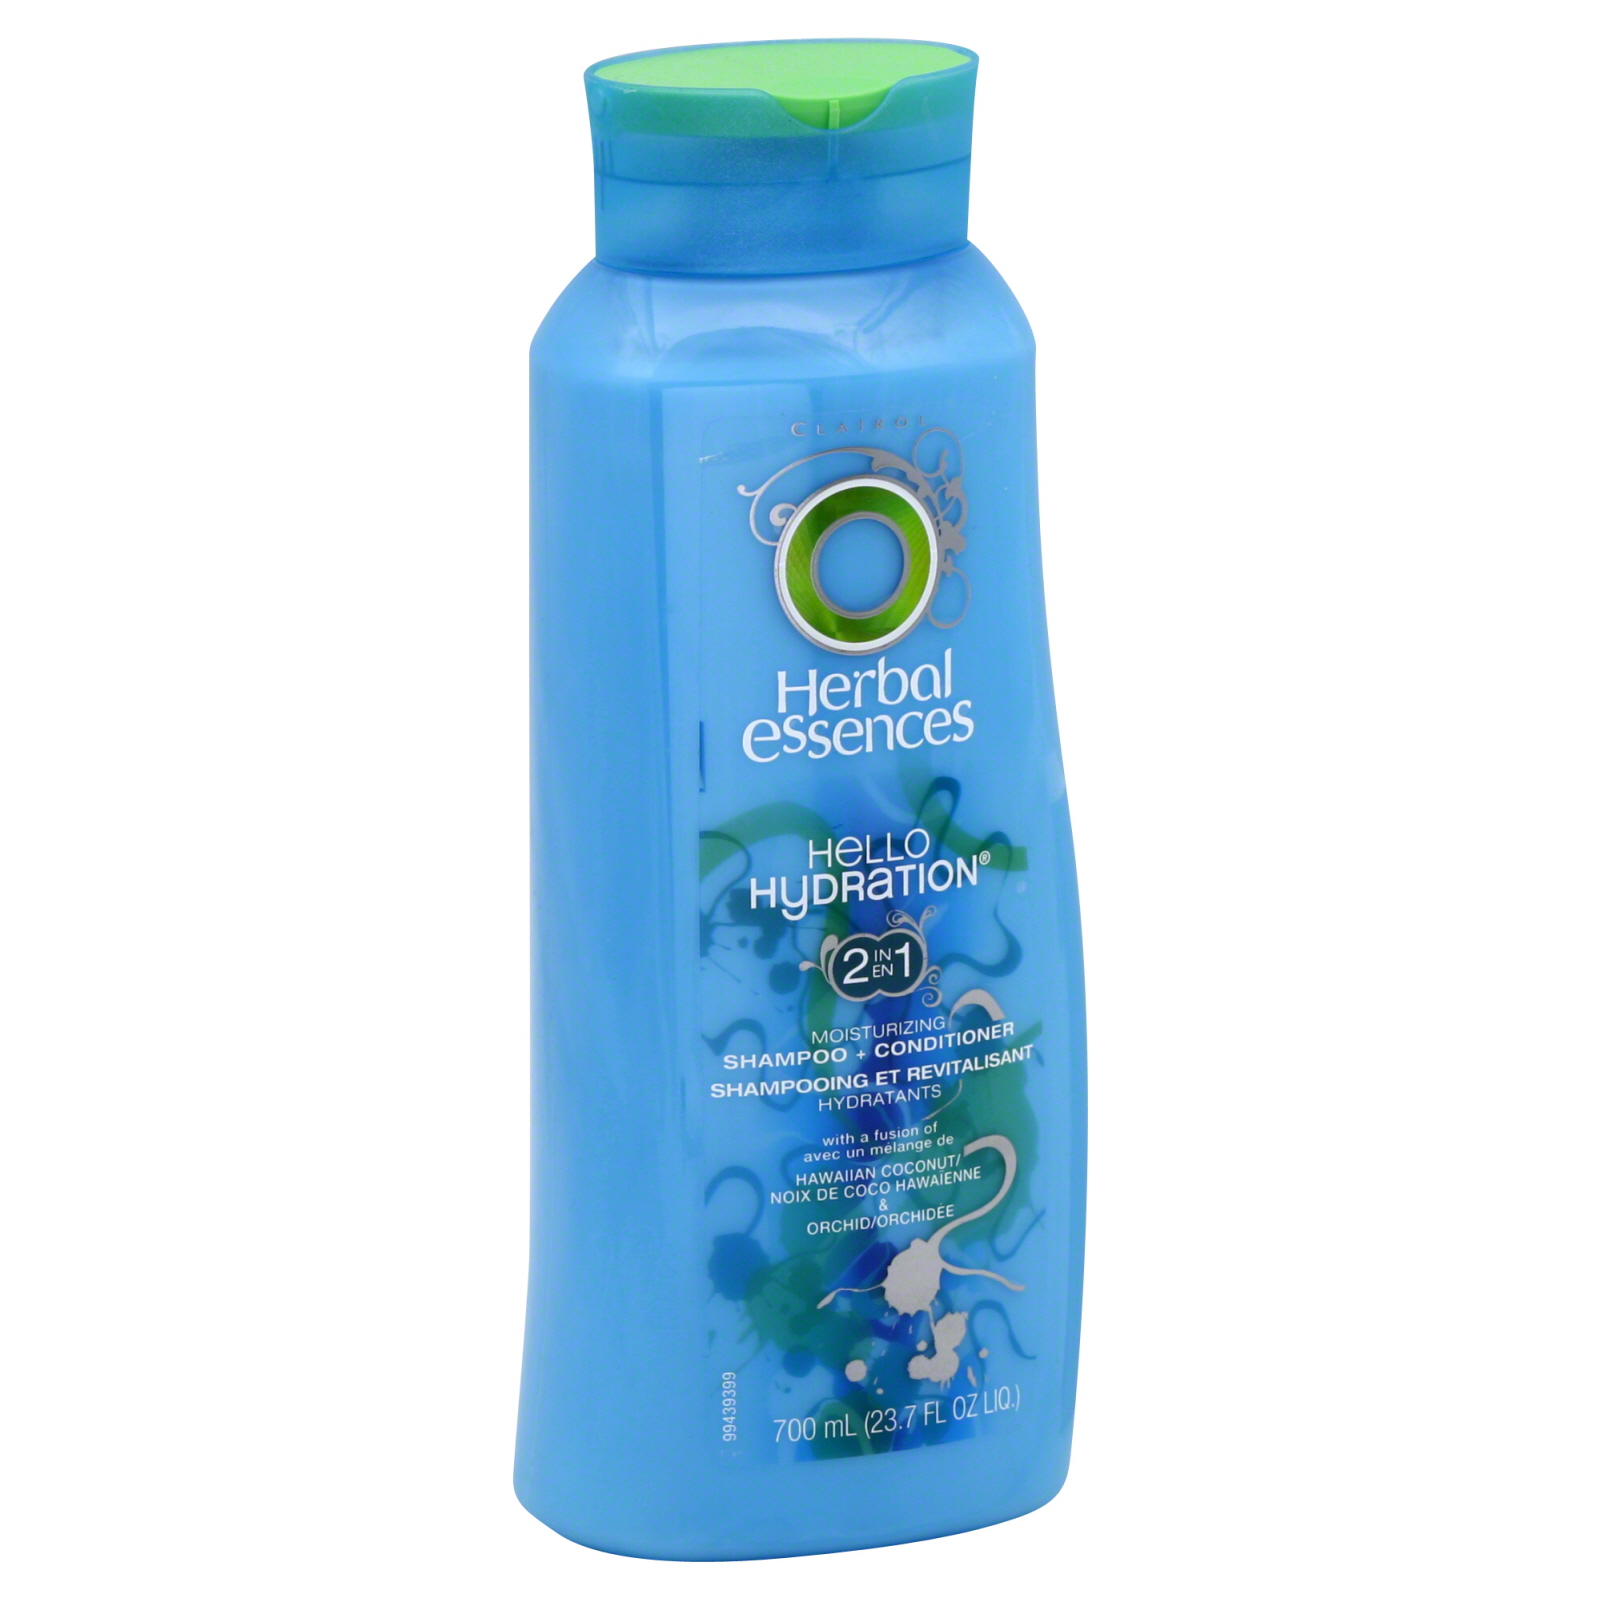 Herbal Essences Hello Hydration 2 in 1 Moisturizing Shampoo + Conditioner, Orchid & Coconut Milk, 23.7 fl oz (700 ml)